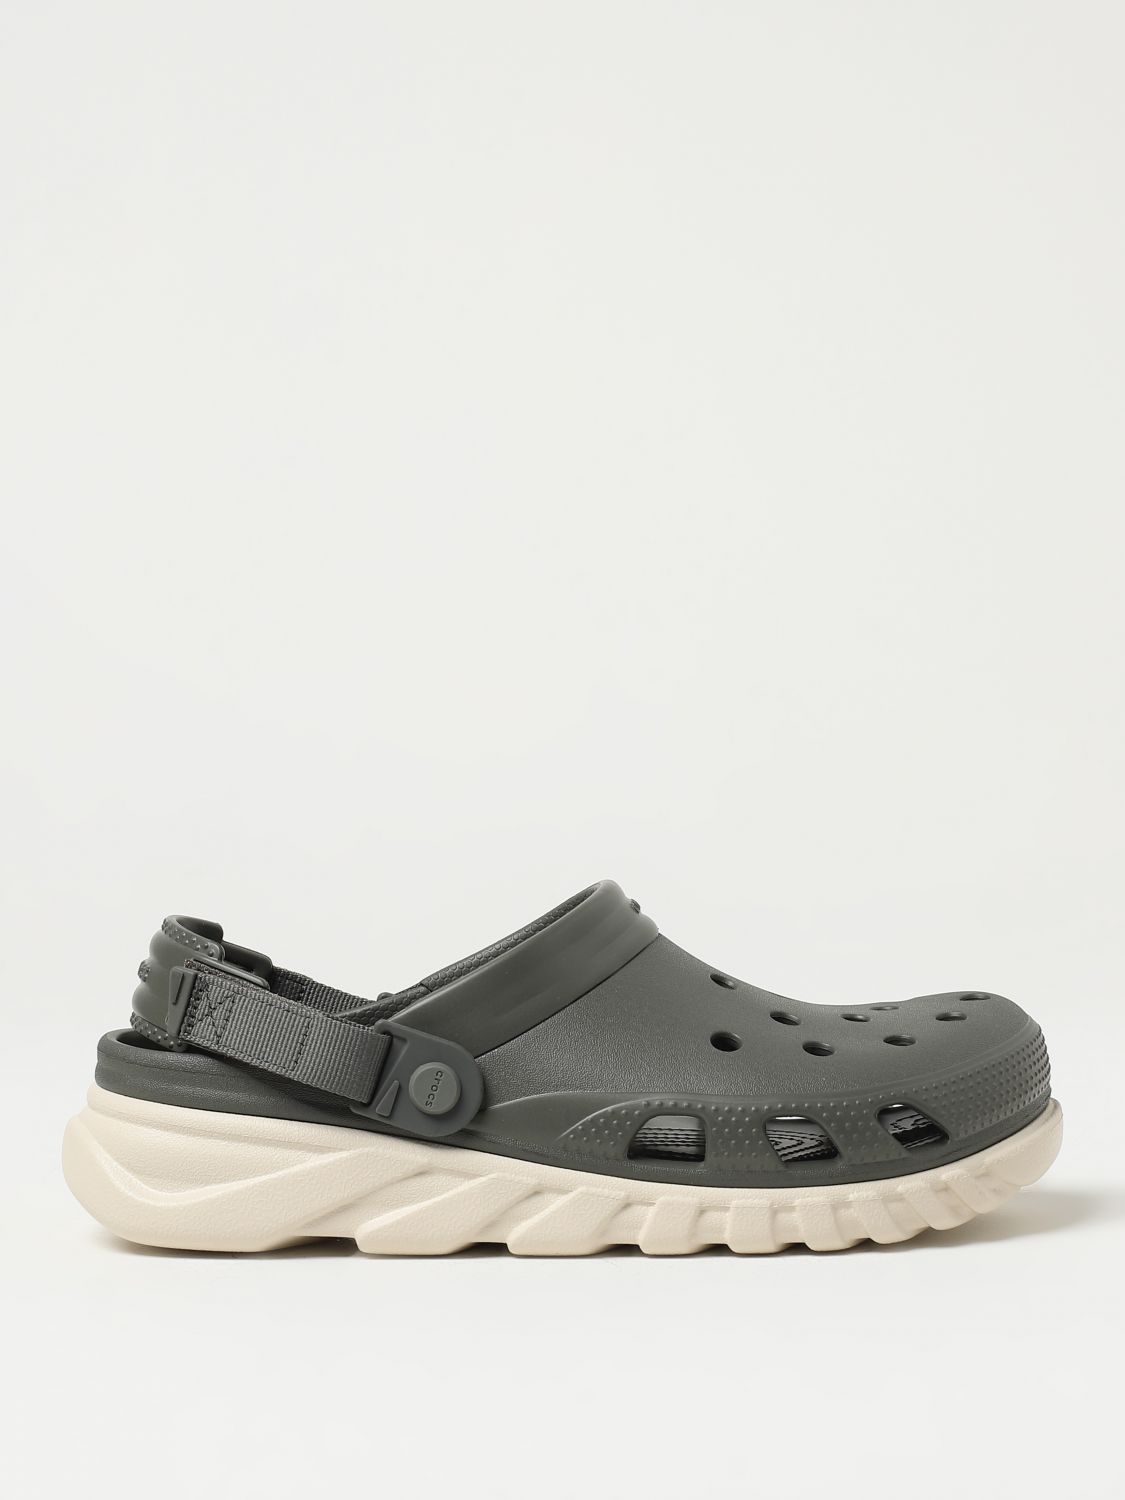 Crocs Sandals CROCS Men colour Olive